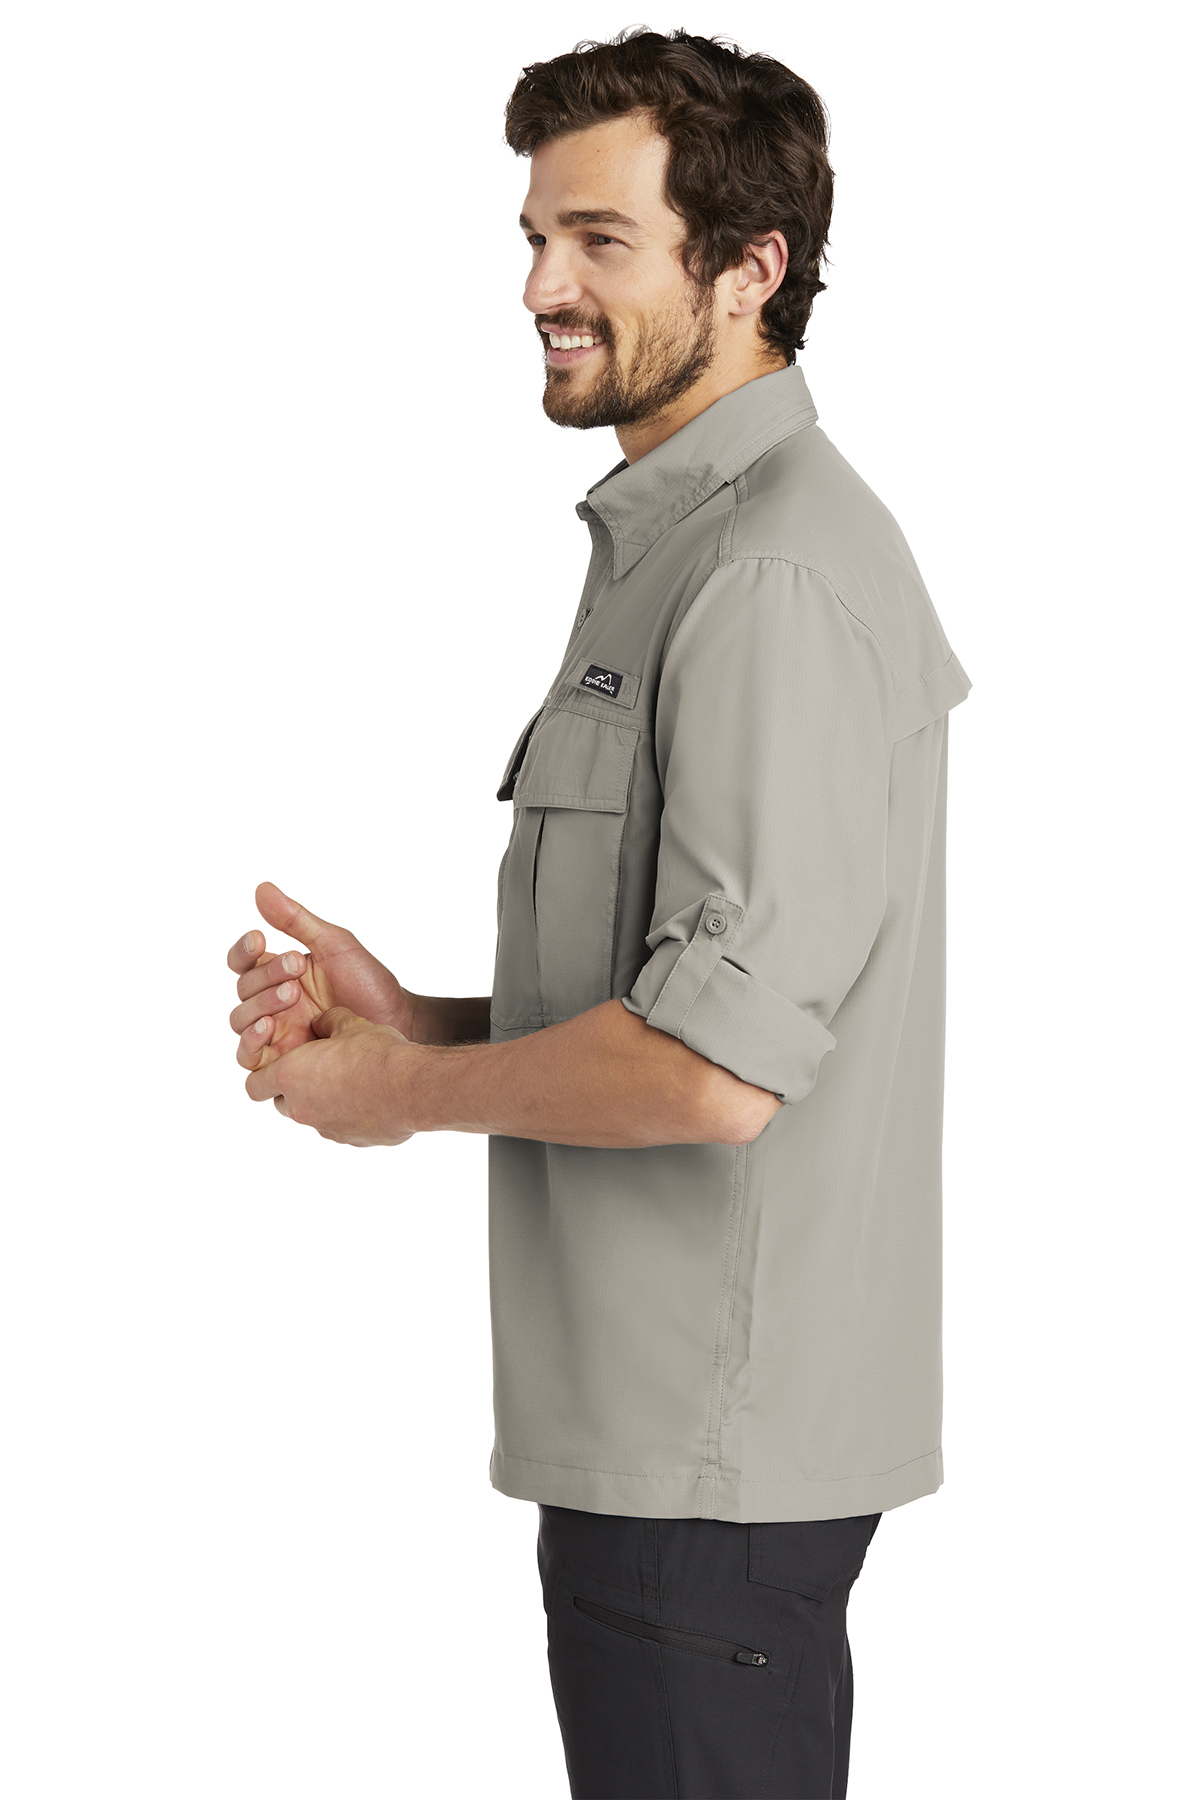 Samaki Big Barra Long Sleeve Adult Fishing Shirt Size 5XL